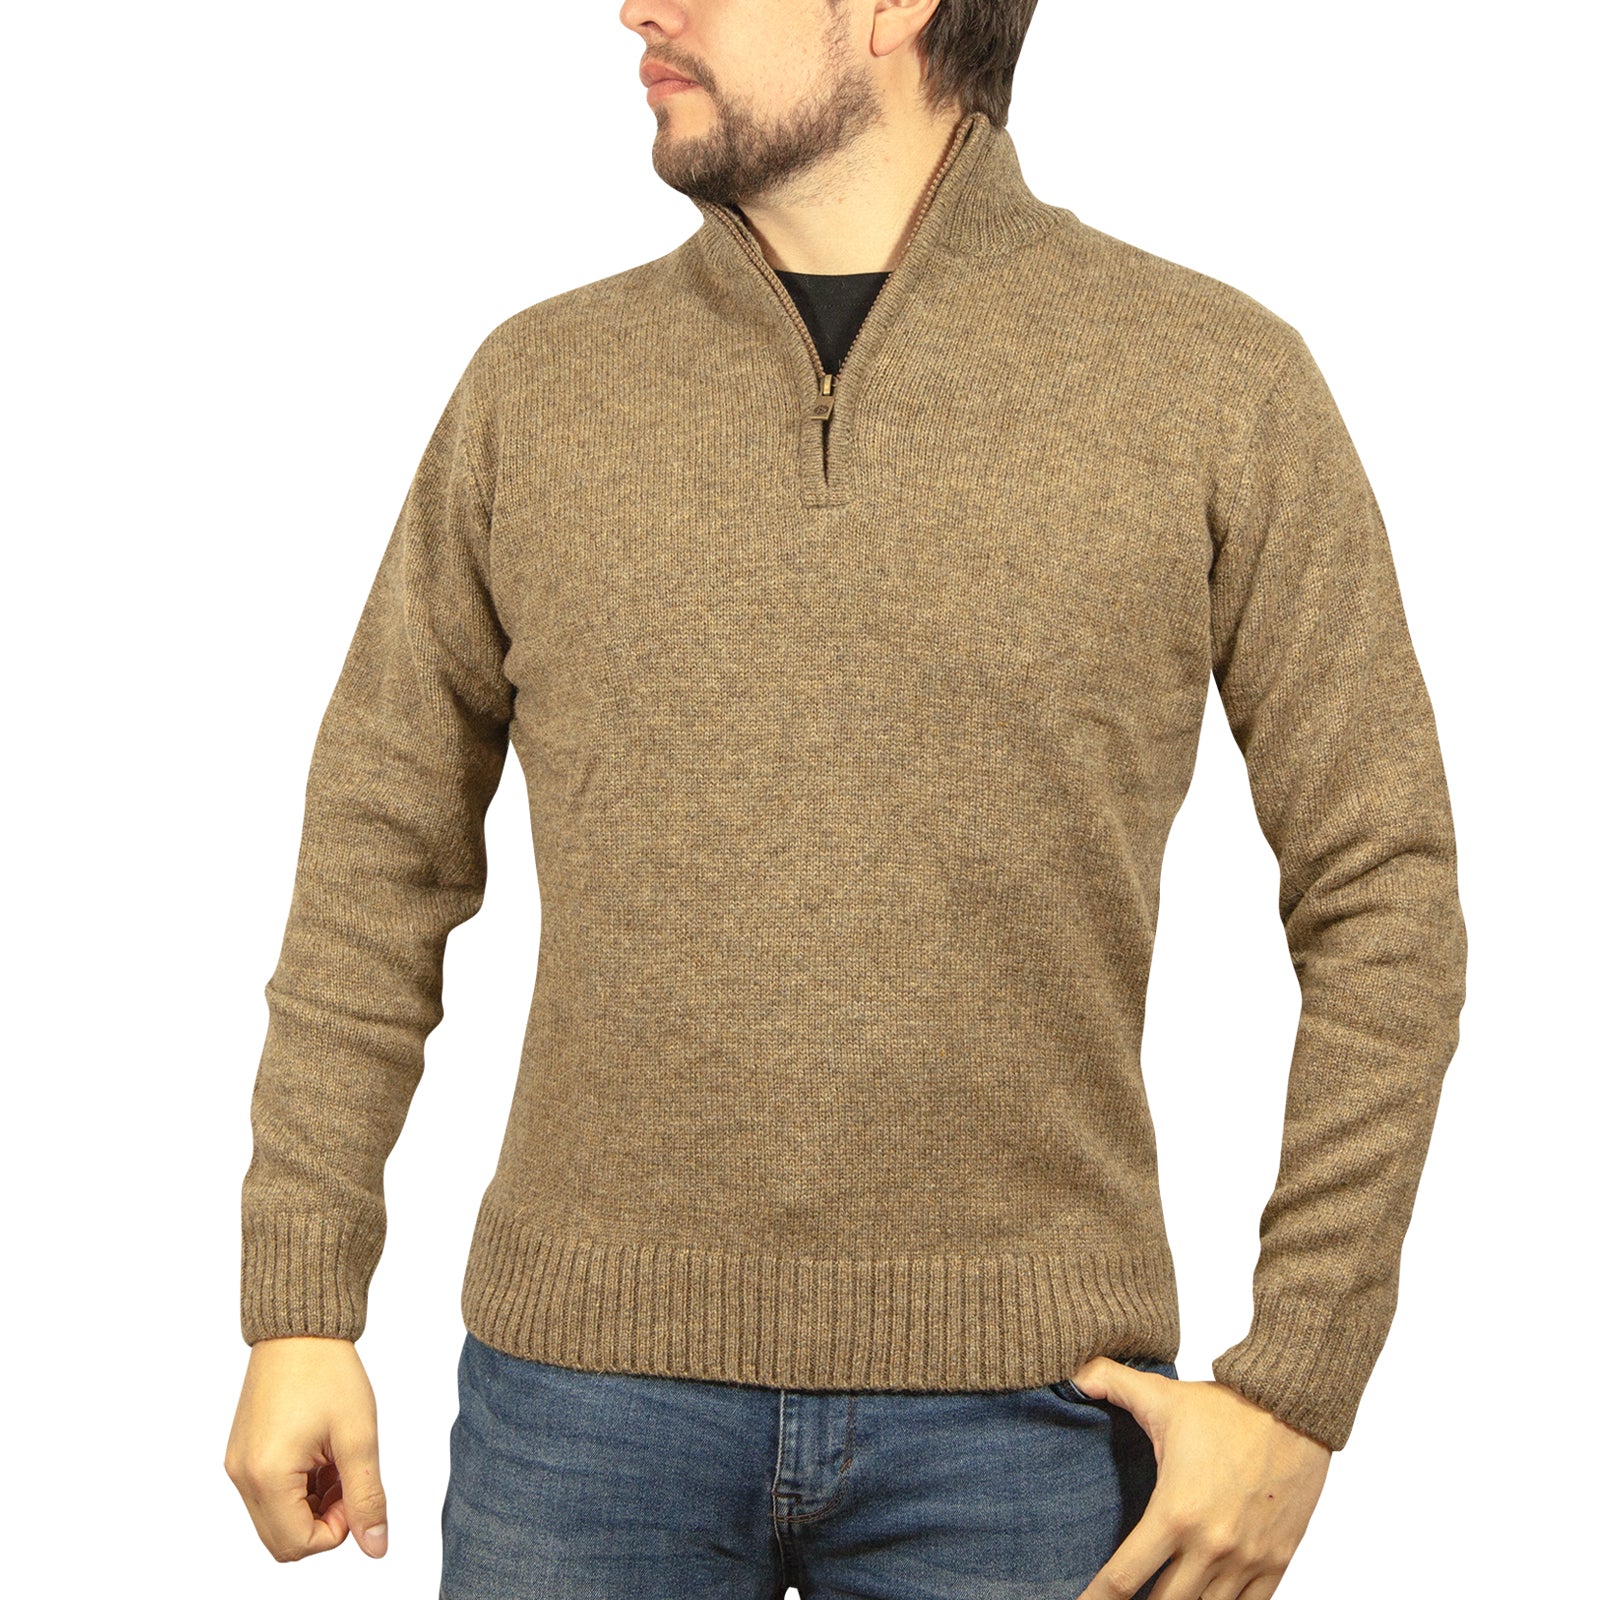 100% SHETLAND WOOL Half Zip Up Knit JUMPER Pullover Mens Sweater Knitted - Nutmeg (23) - XL - 0